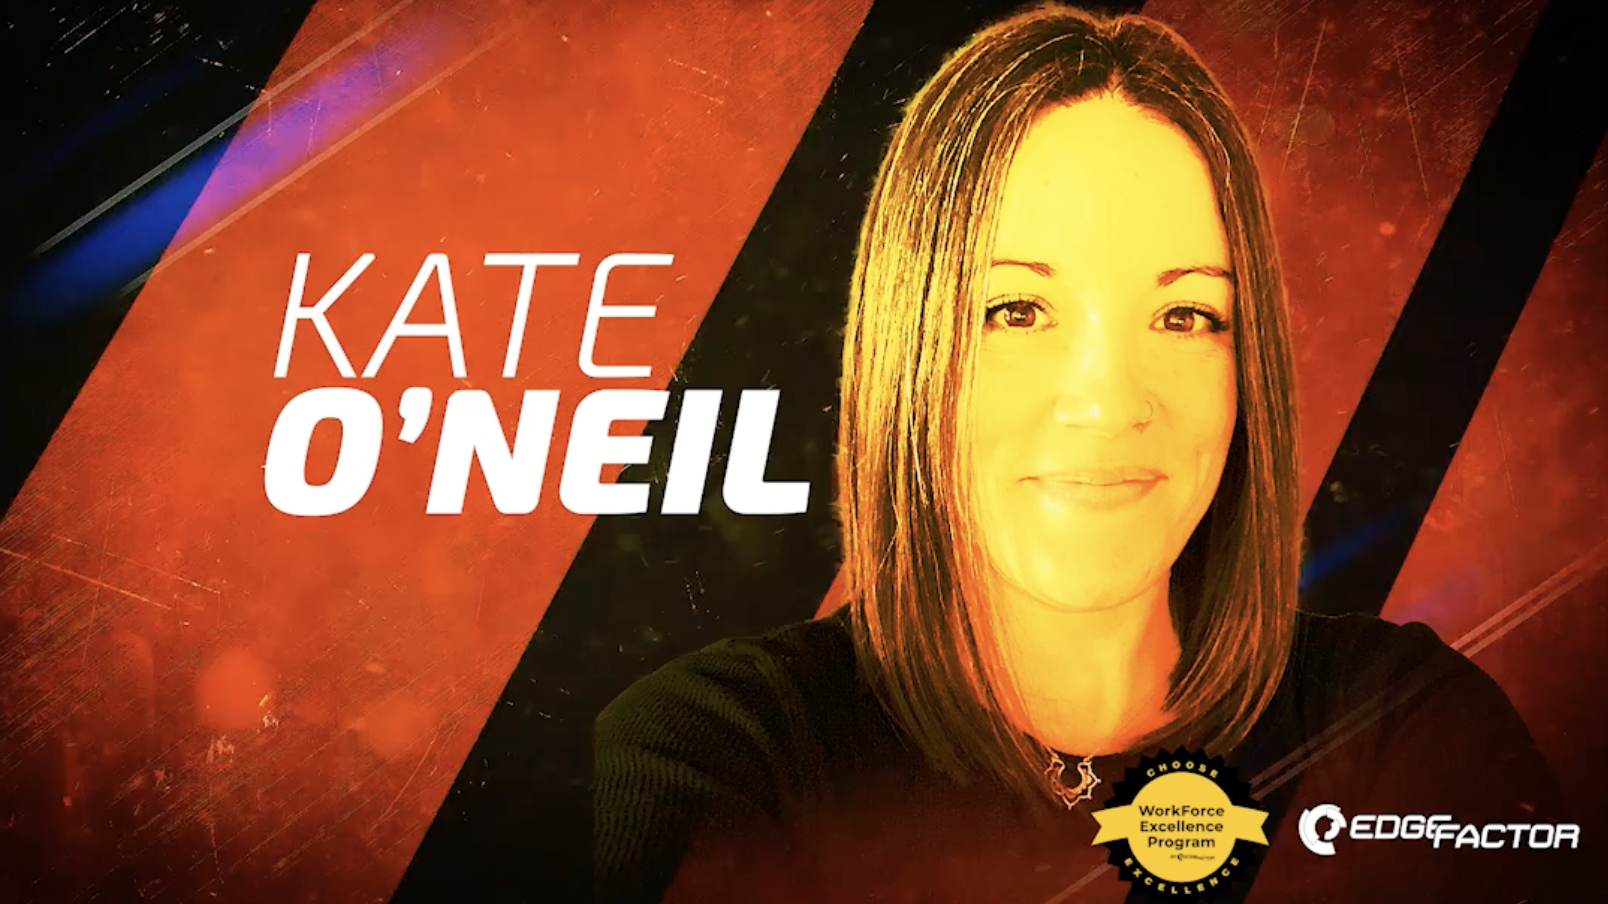 Edge Factor WEP Award Judge - Kate ONeil